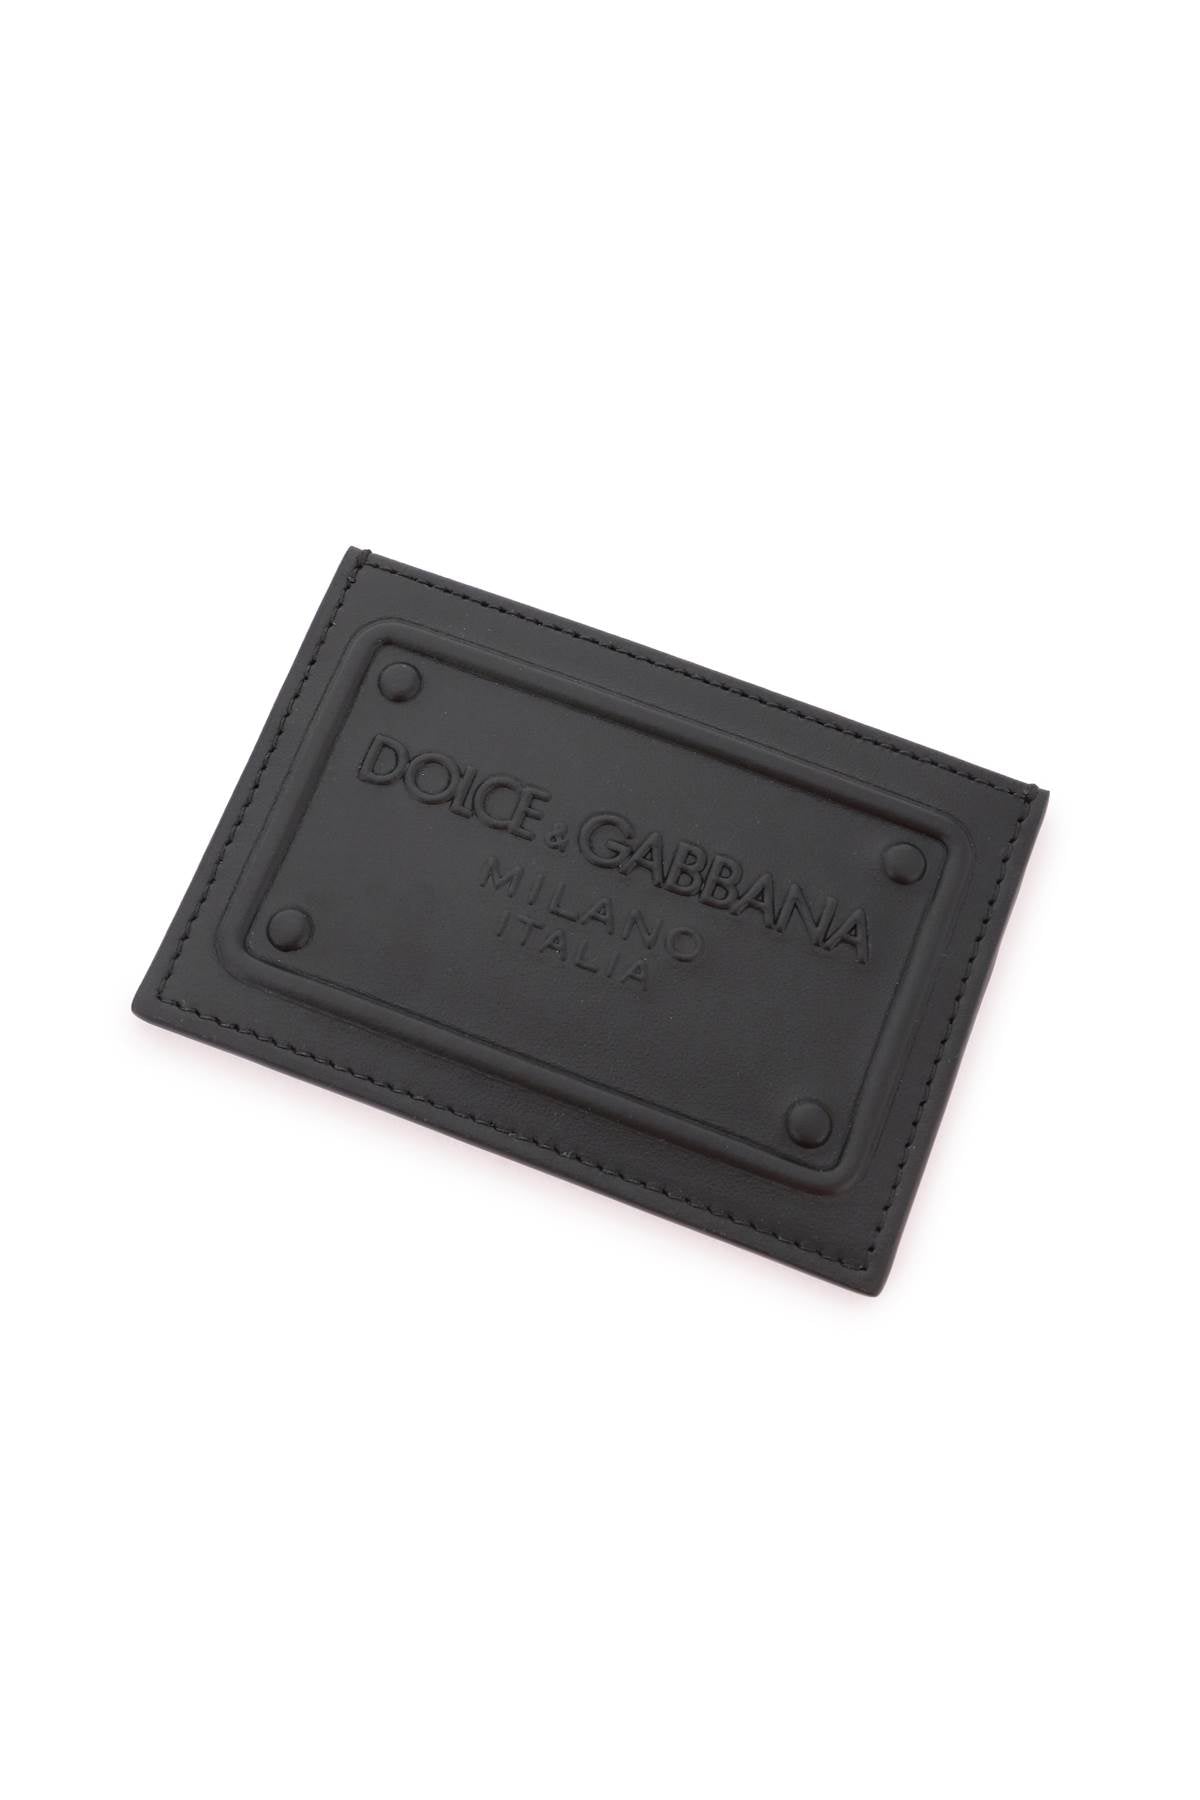 Dolce & Gabbana Dolce & gabbana embossed logo leather cardholder